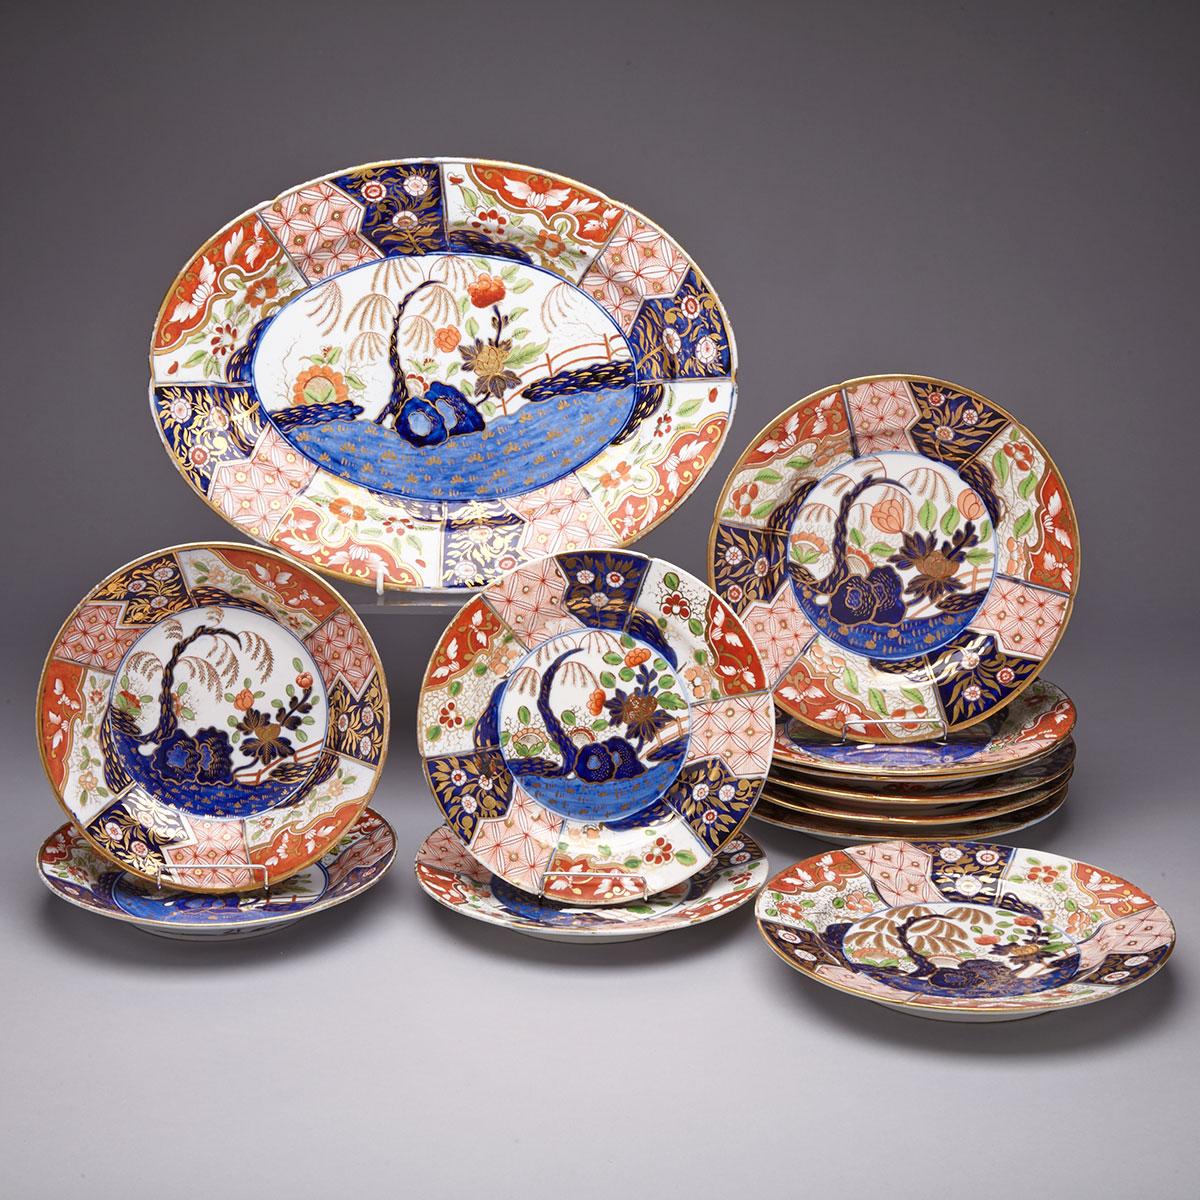 Eleven Coalport Japan Pattern Plates and an Oval Platter, c.1805-10